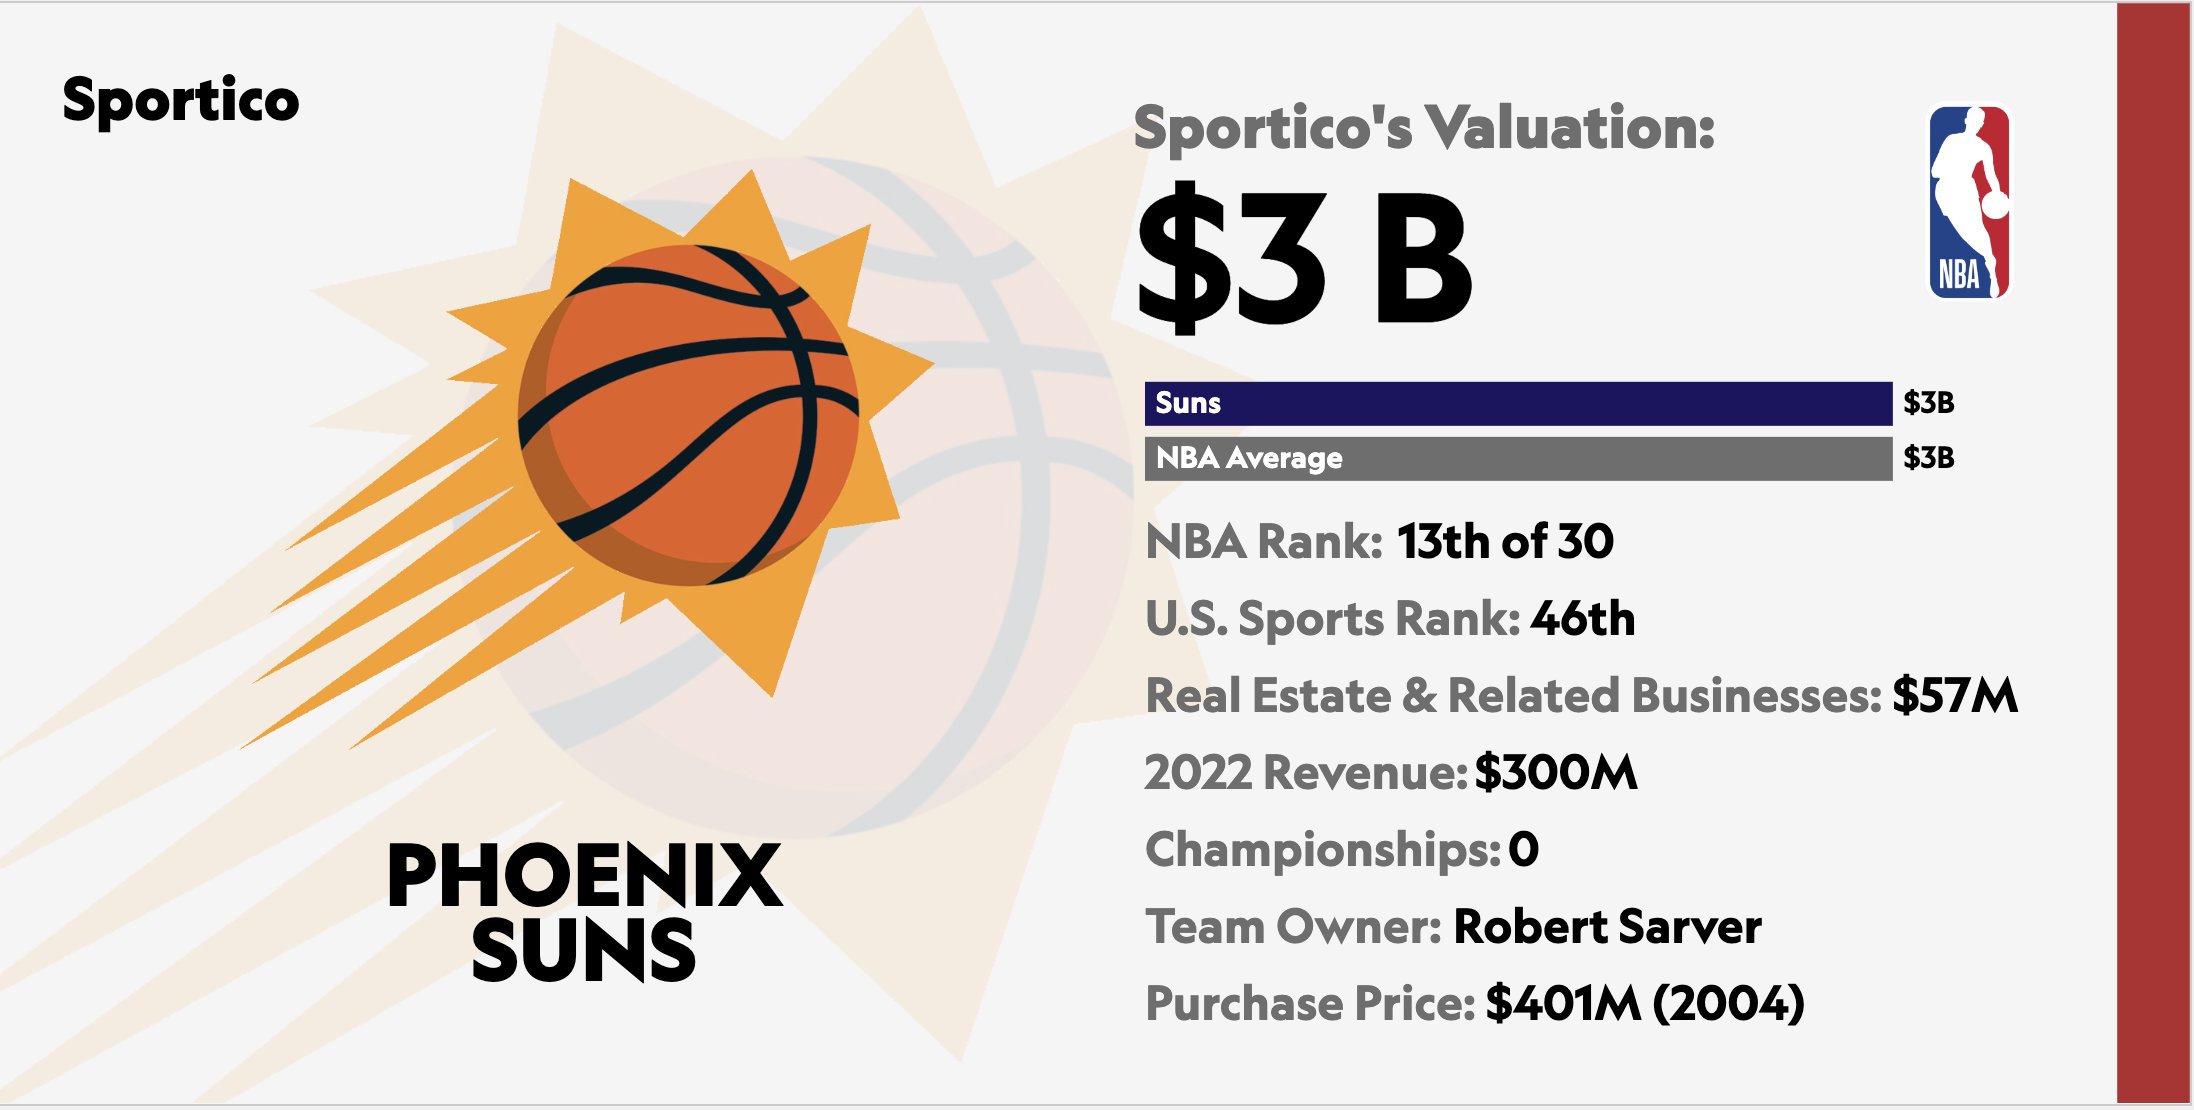 Sportico's NBA Valuations